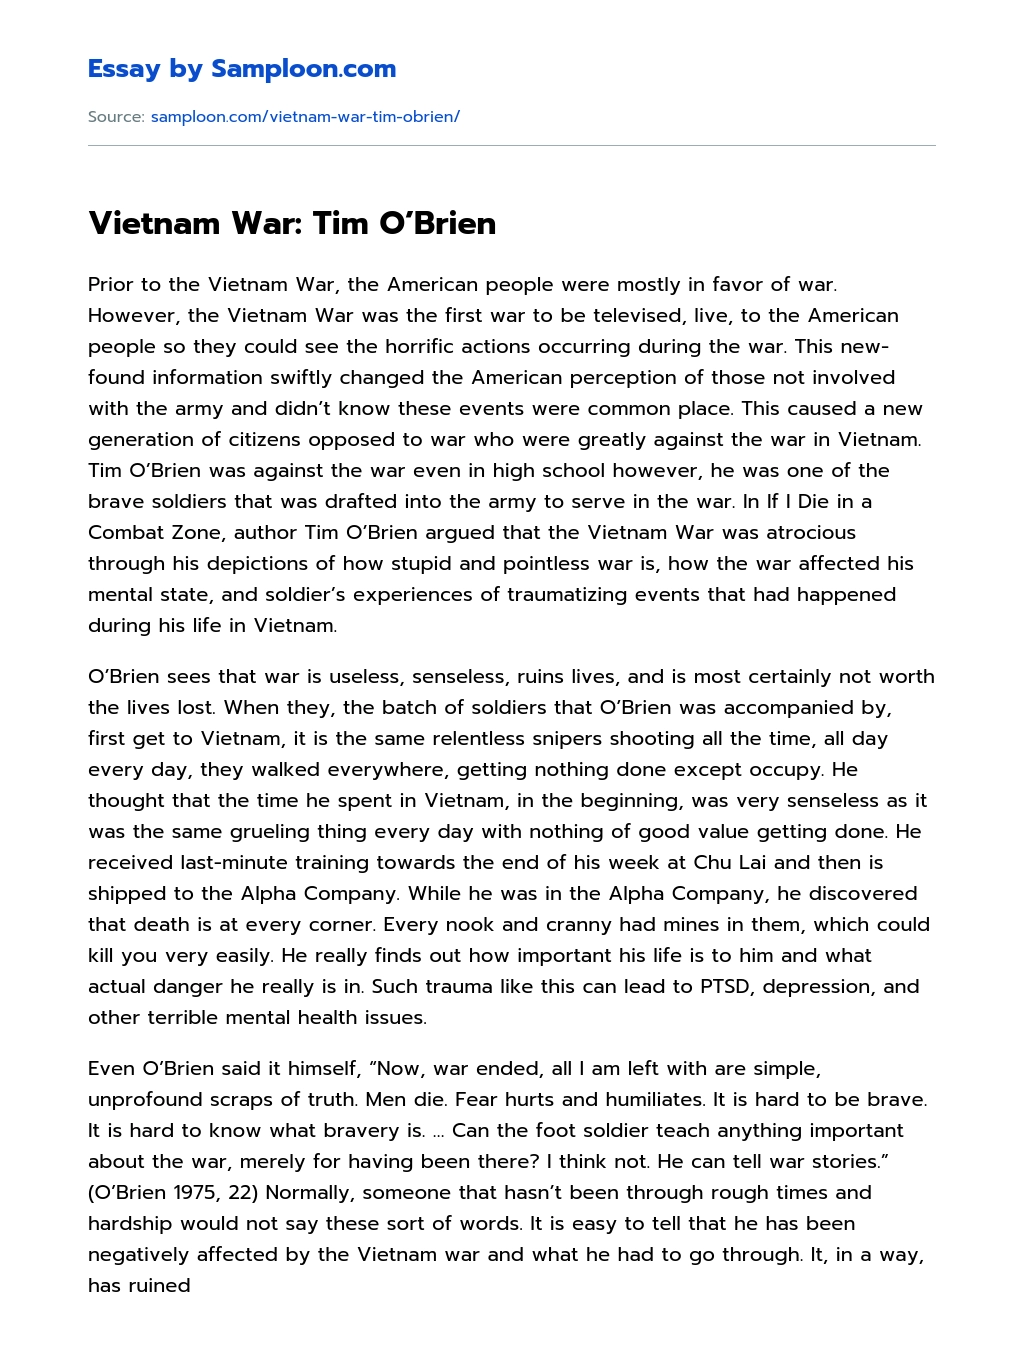 Vietnam War: Tim O’Brien essay